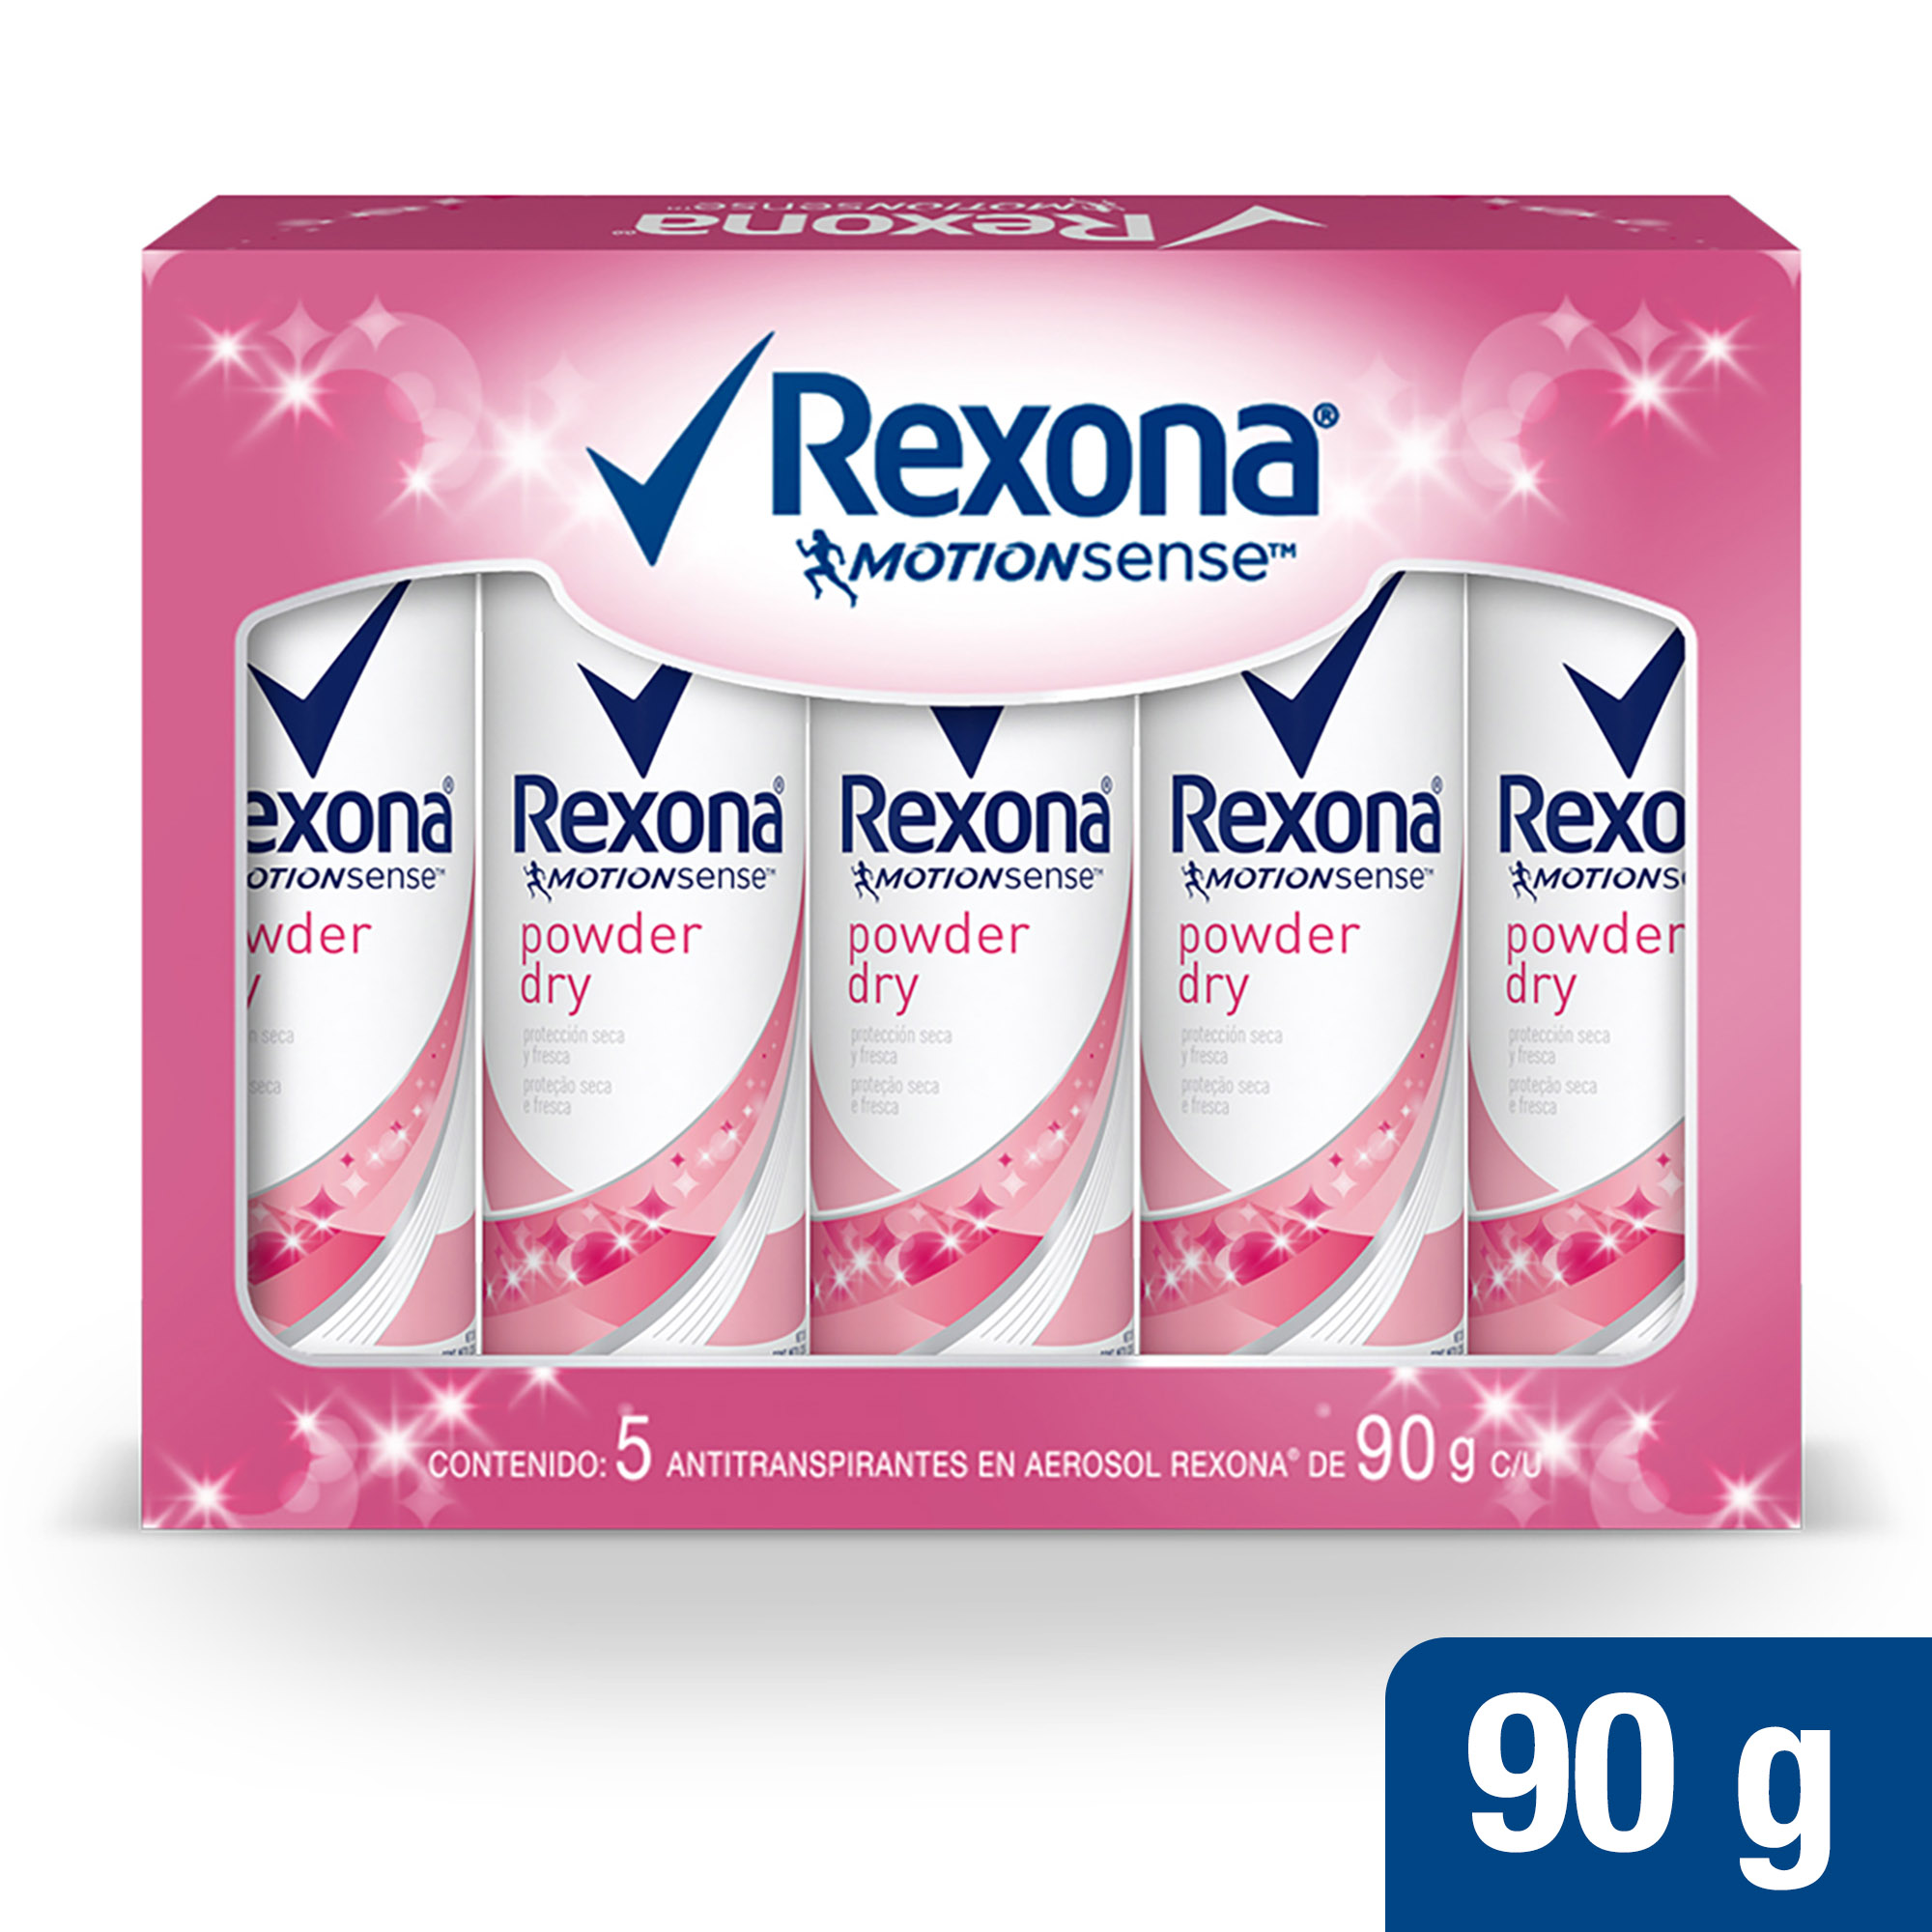 Rexona antitranspirante en aerosol powder dry (5 x 90 g)